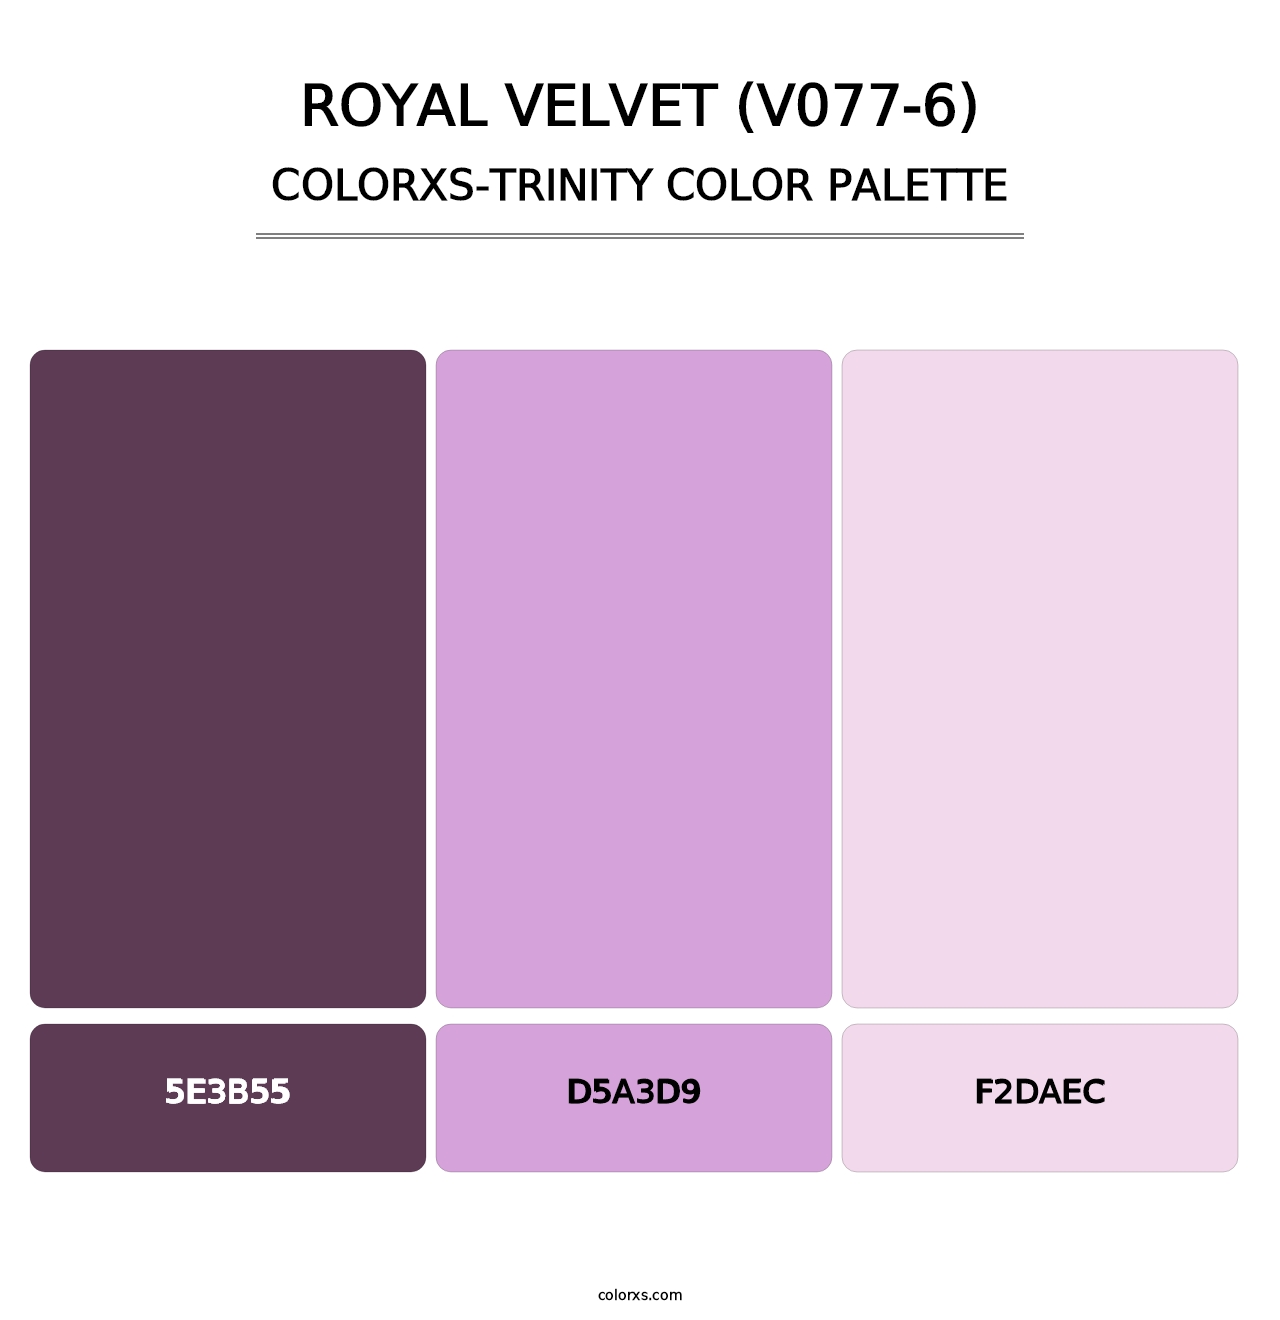 Royal Velvet (V077-6) - Colorxs Trinity Palette